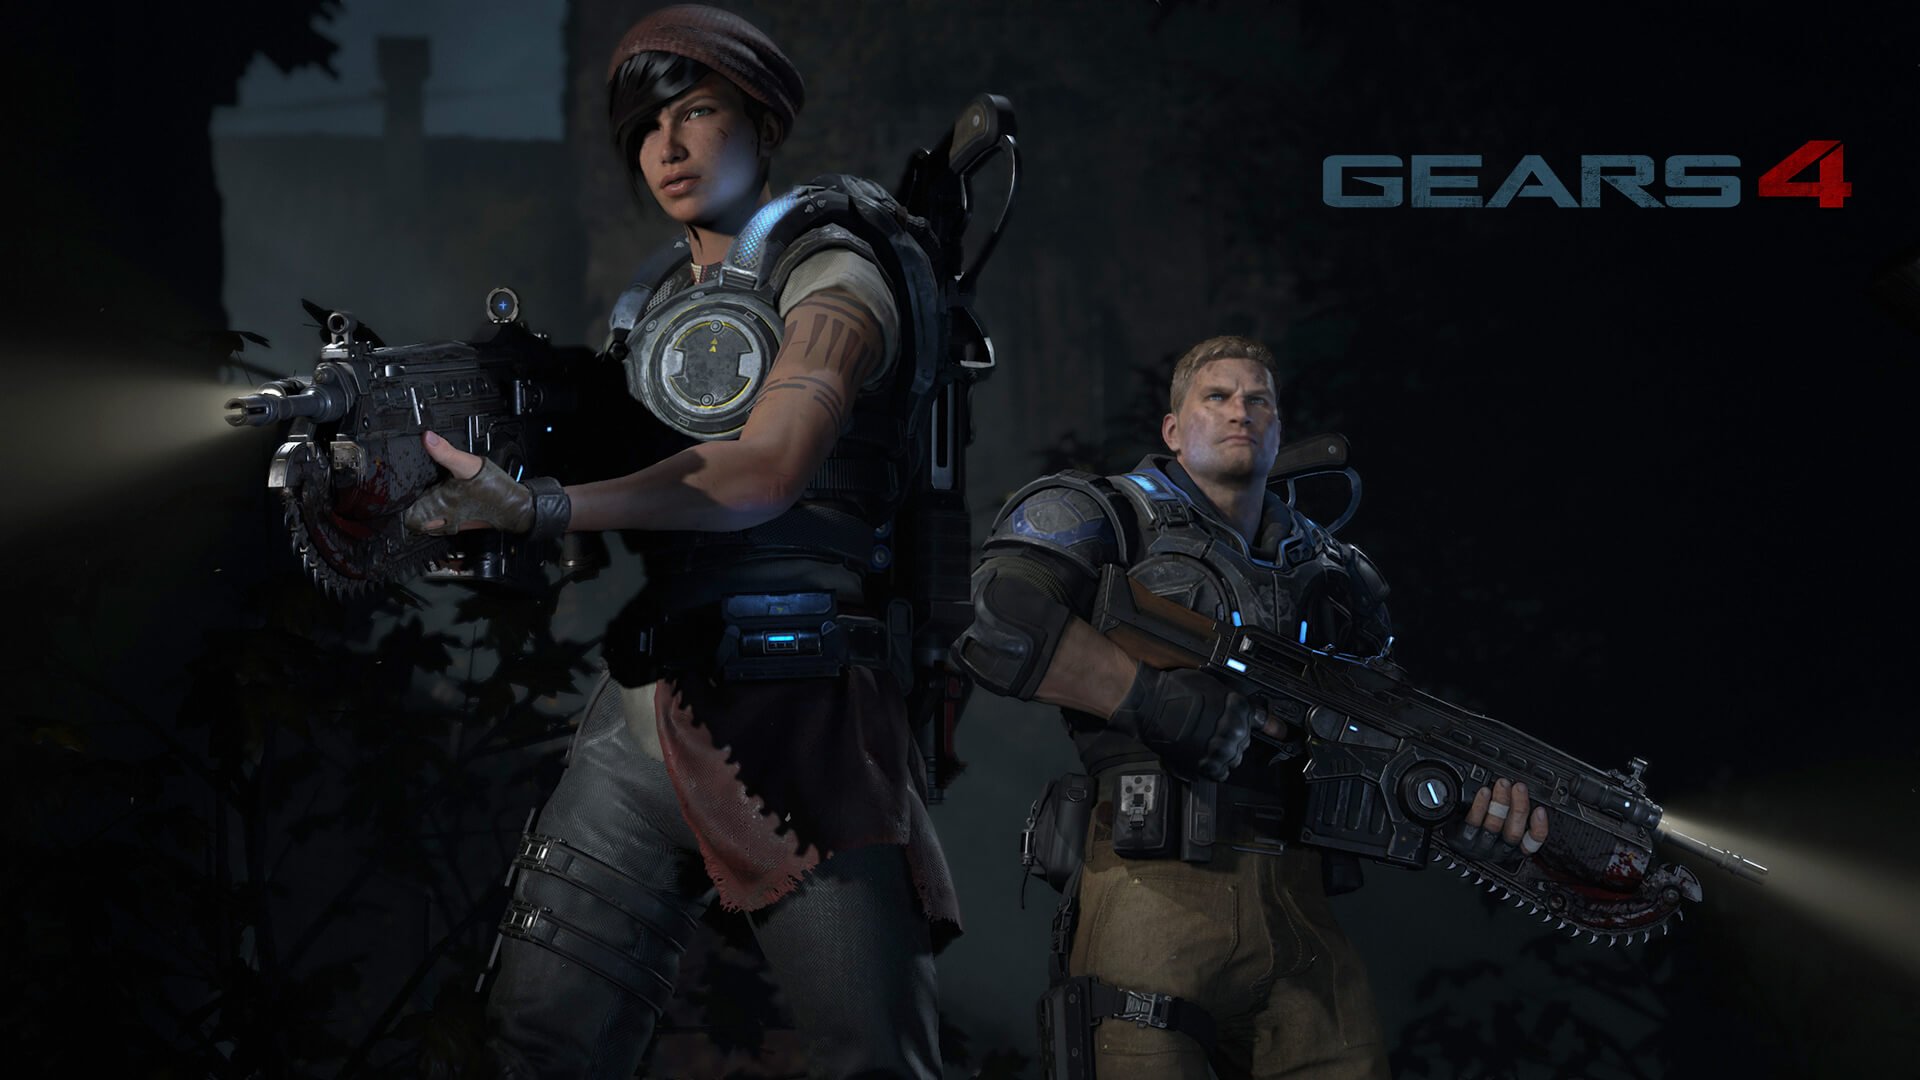 Gears of War 4 Multiplayer Beta Coming April 18th